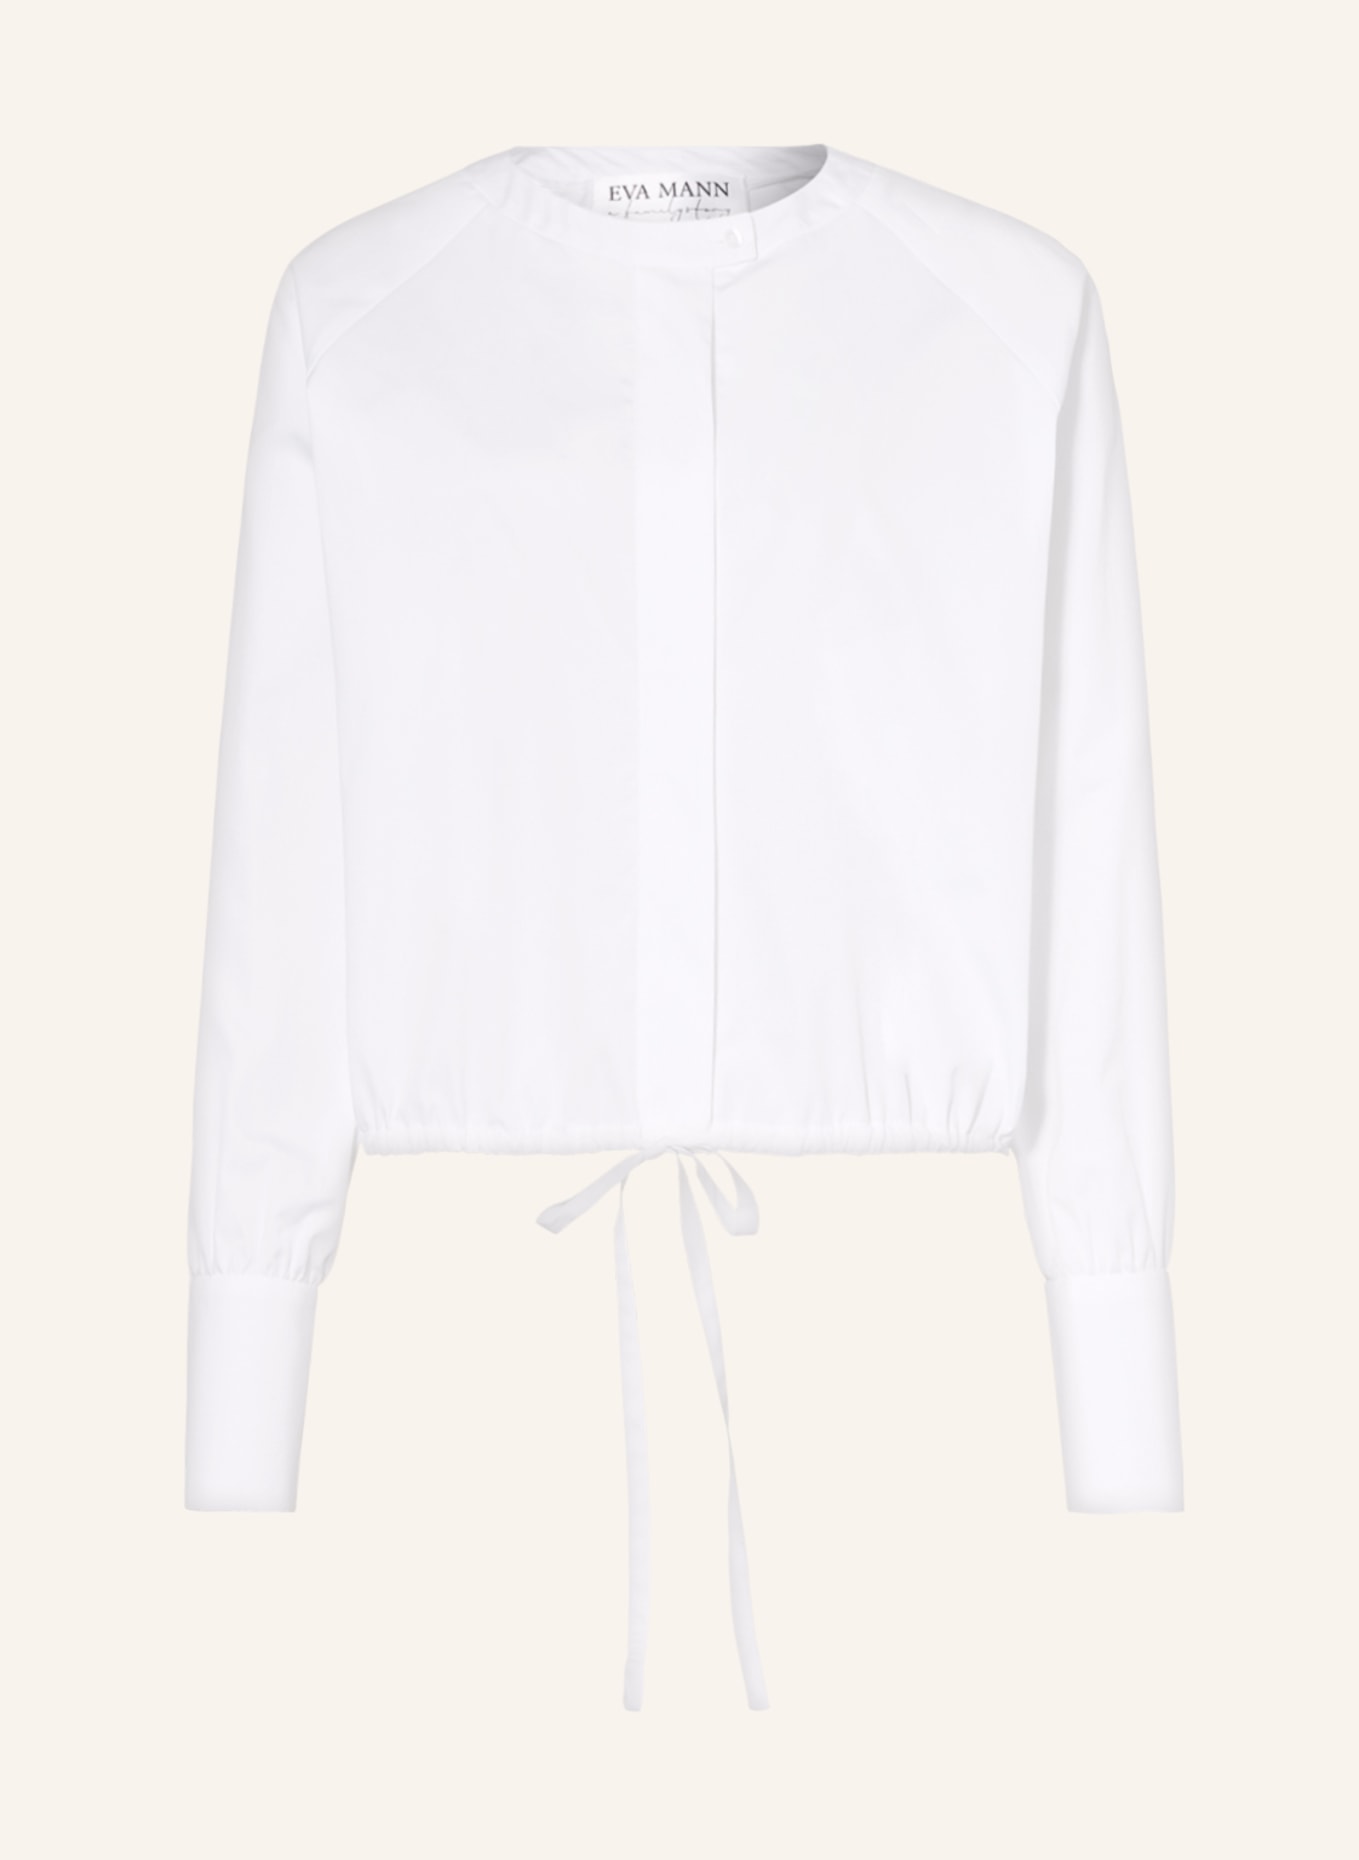 EVA MANN Cropped-Bluse CLAIRE WINSTON, Farbe: WEISS (Bild 1)